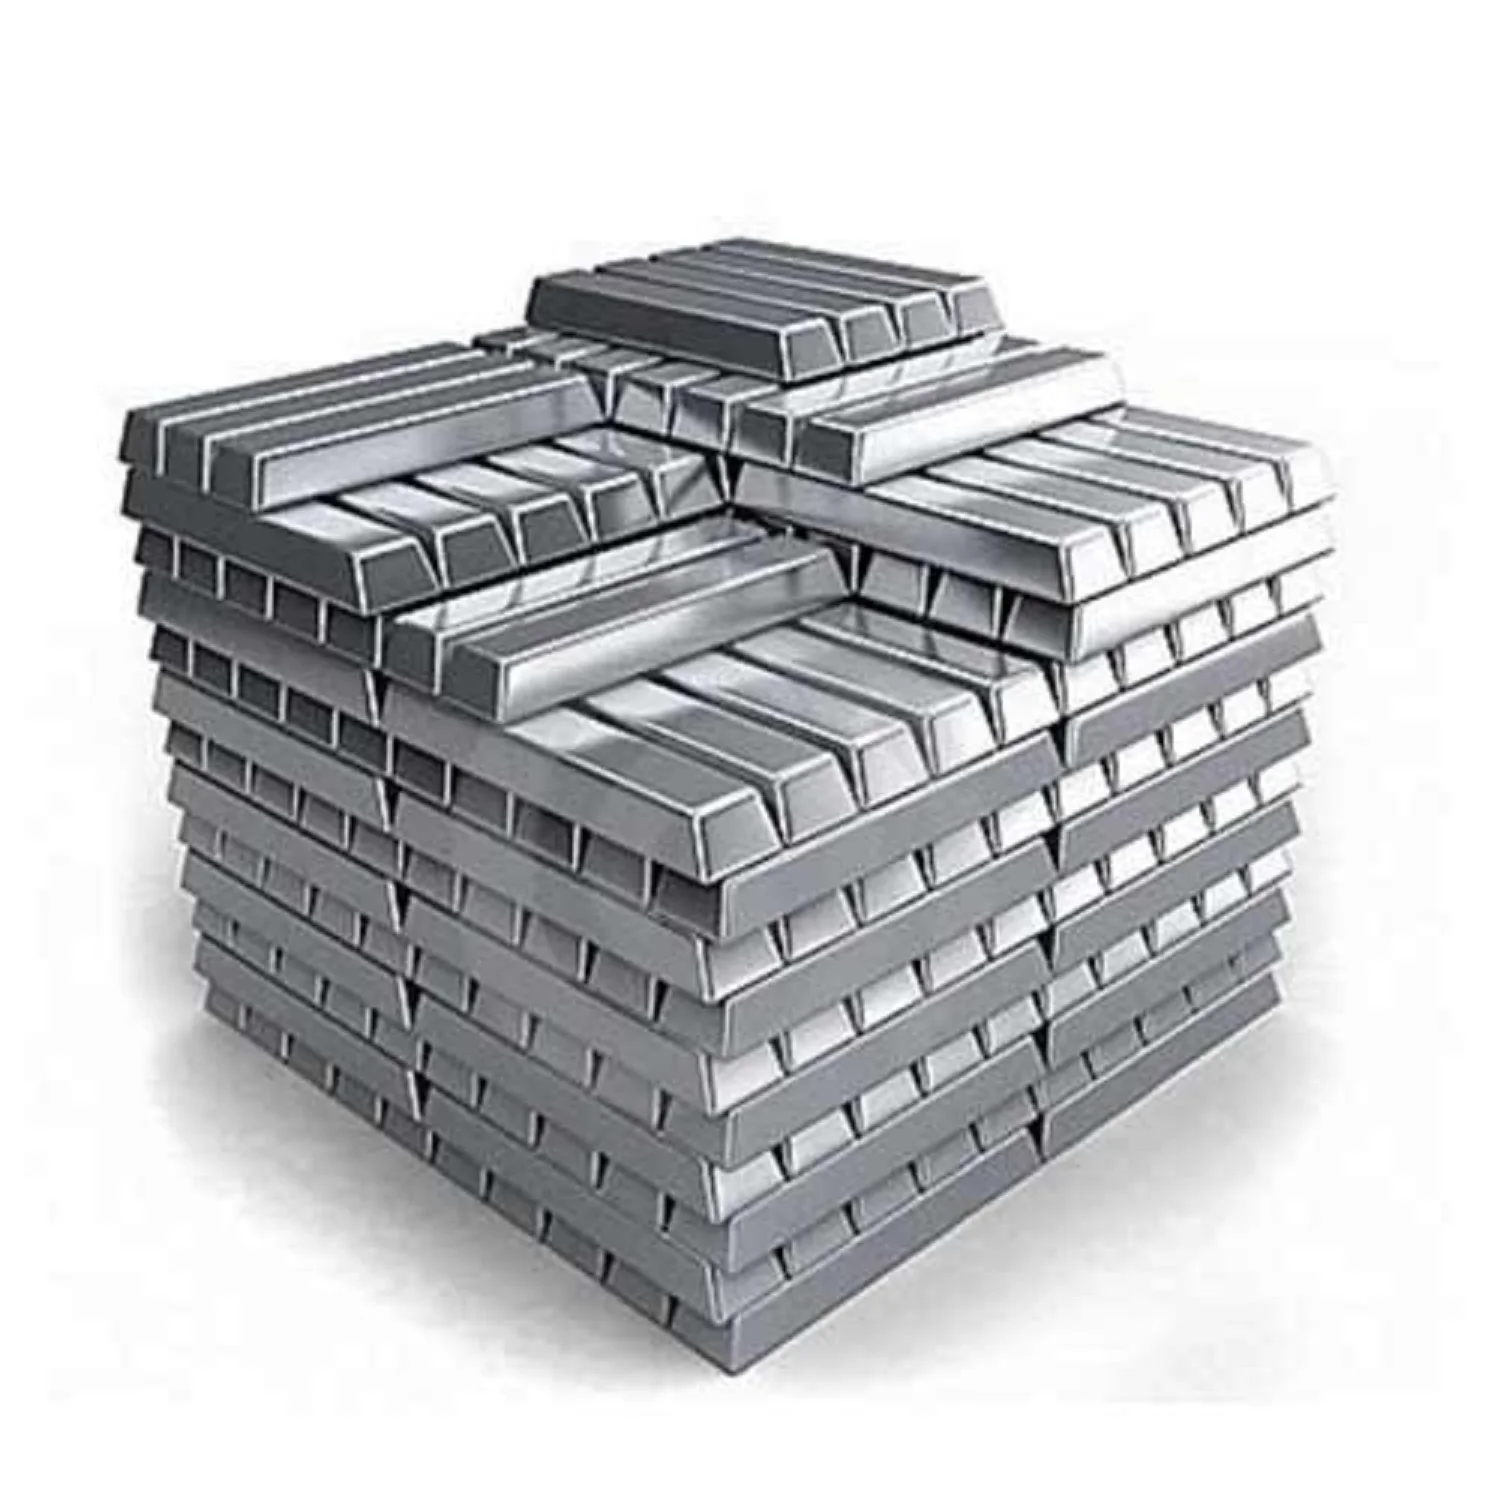 Factory Price Aluminum Alloy Ingot Adc12 99.7 A7 A Grade Aluminum Ingots For for building aluminum ingot 99.97